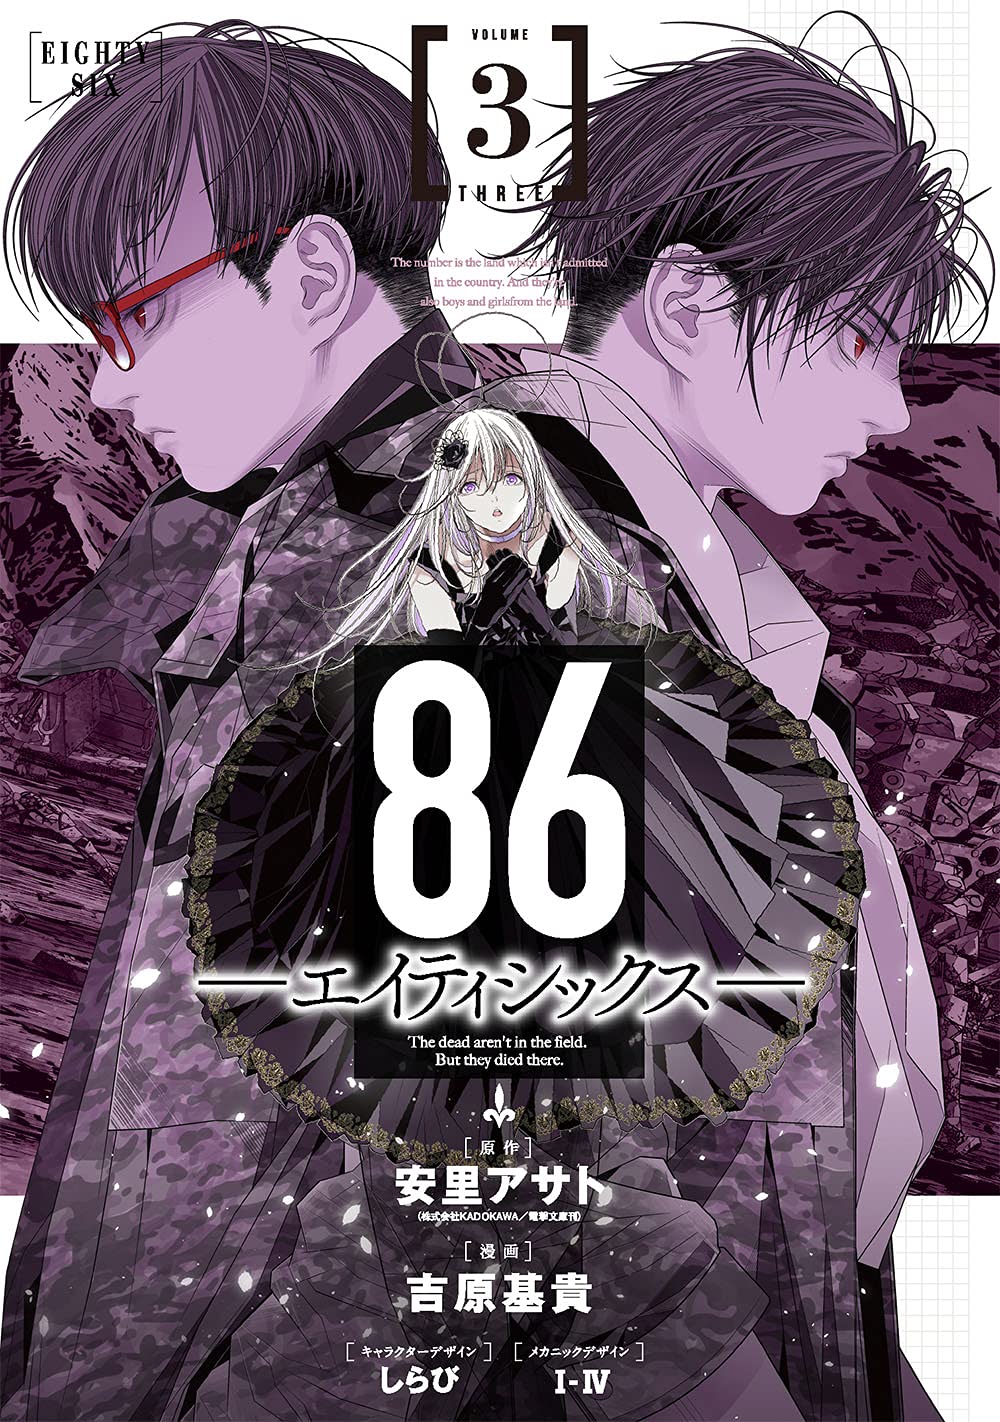 Light Novel Volume 3, 86 - Eighty Six - Wiki